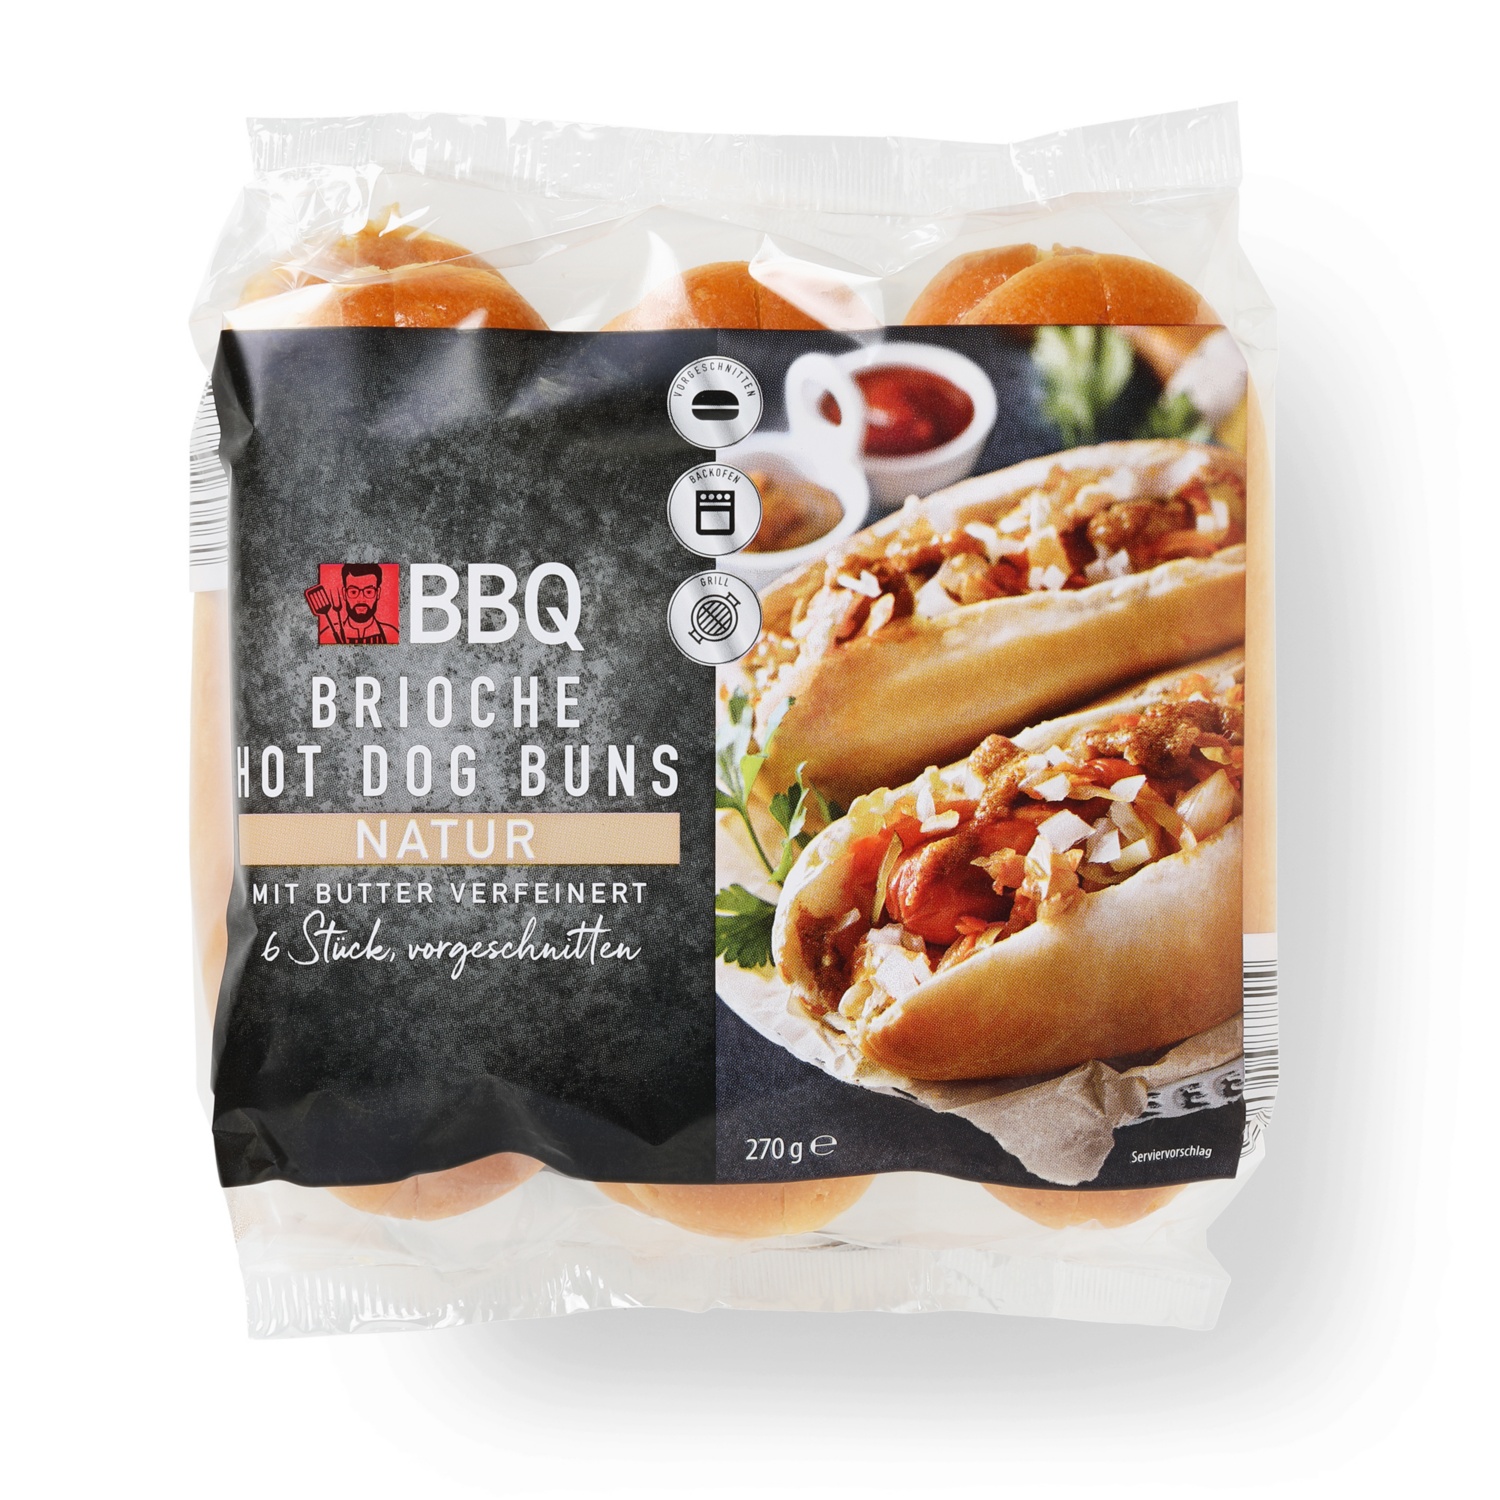 BBQ Brioche Hot Dog Buns